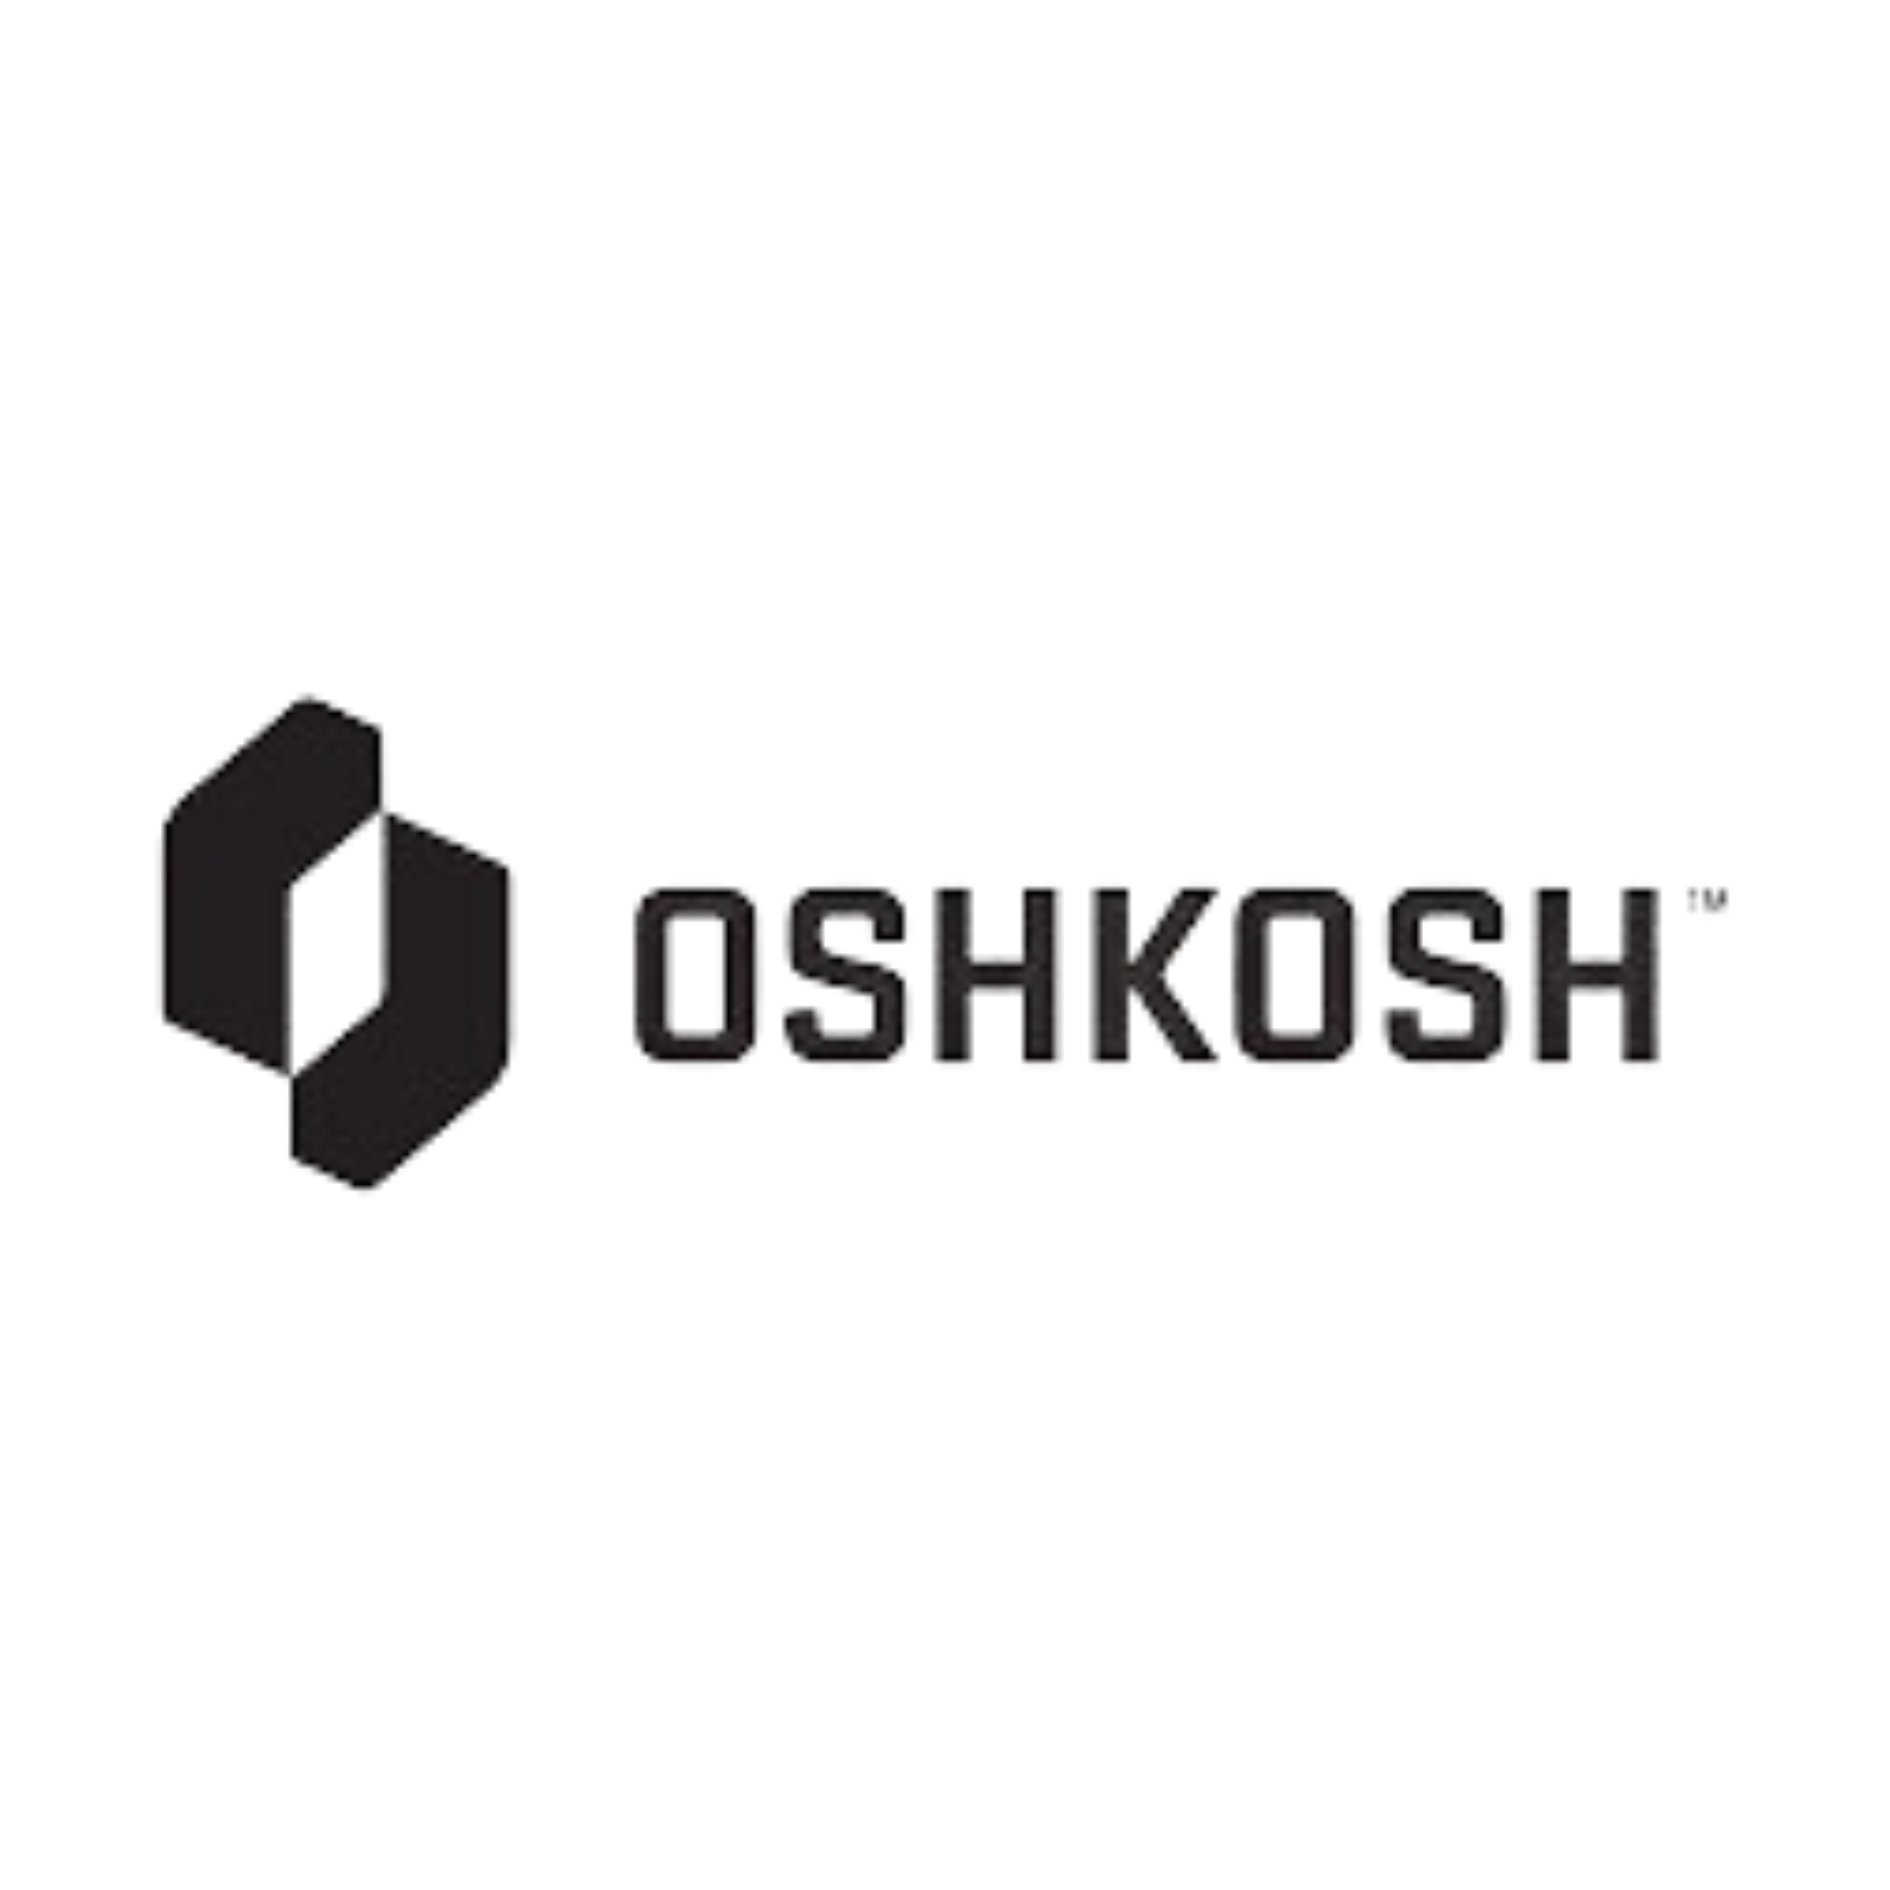 Oshkosh-JLG